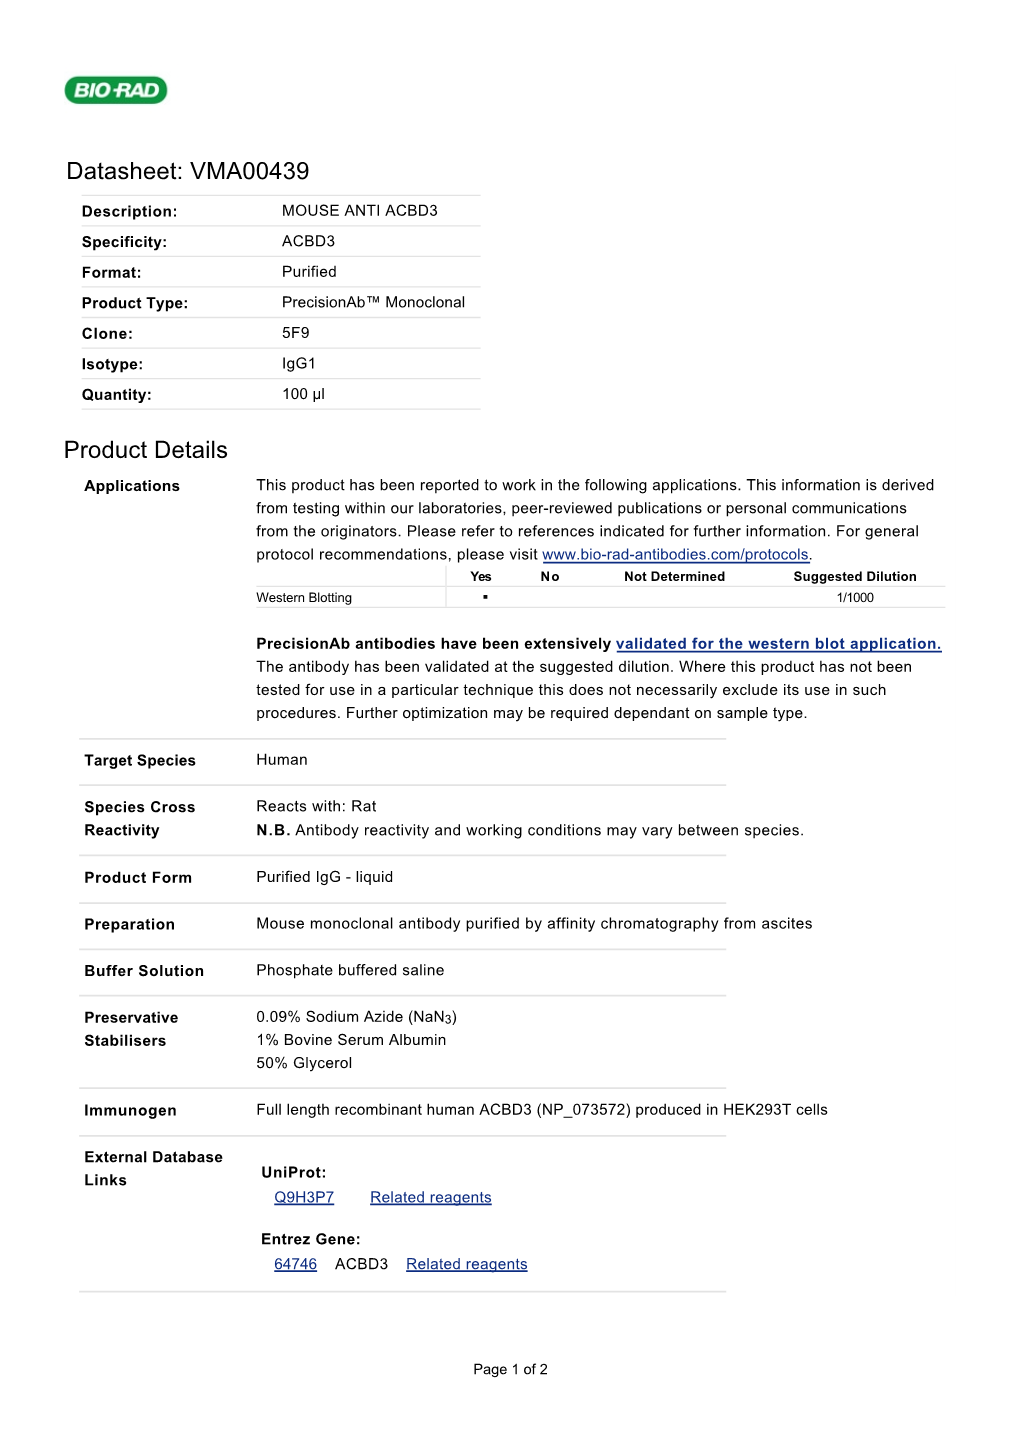 Datasheet: VMA00439 Product Details